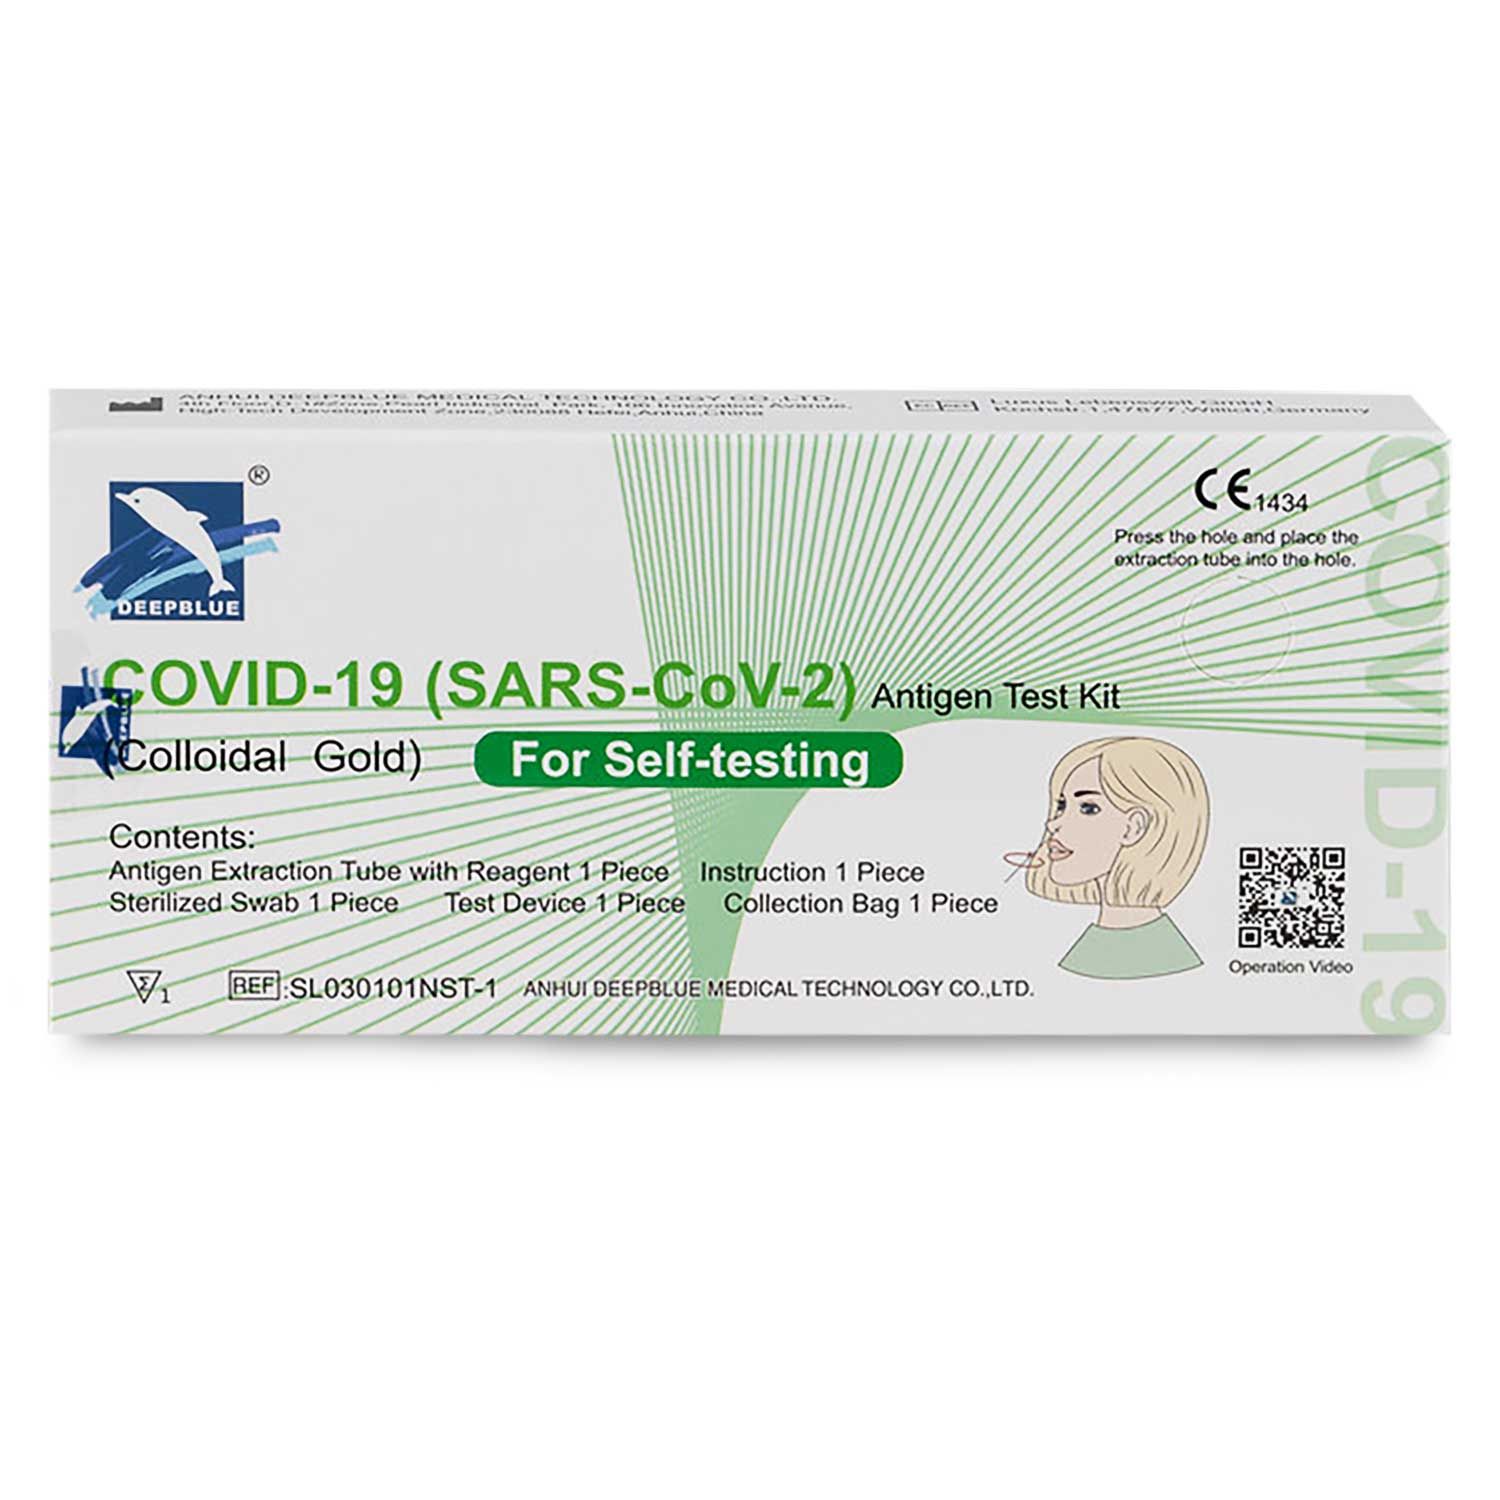 Covid-19 Sars-cov-2 Antigen Test Kit Each Deepblue | ALDI.IE